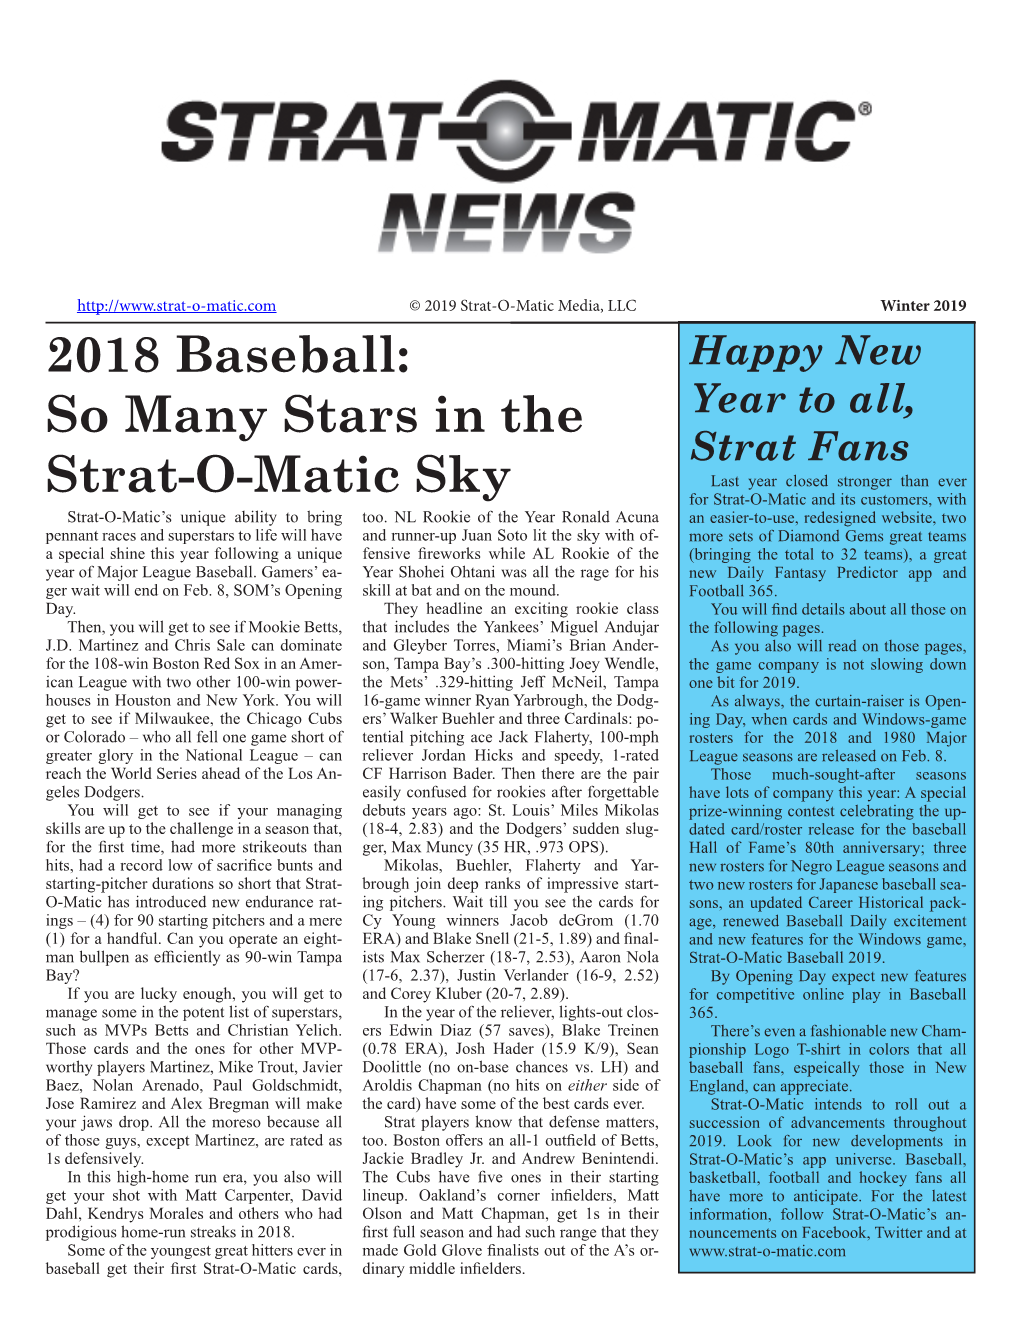 2018 Baseball: So Many Stars in the Strat-O-Matic